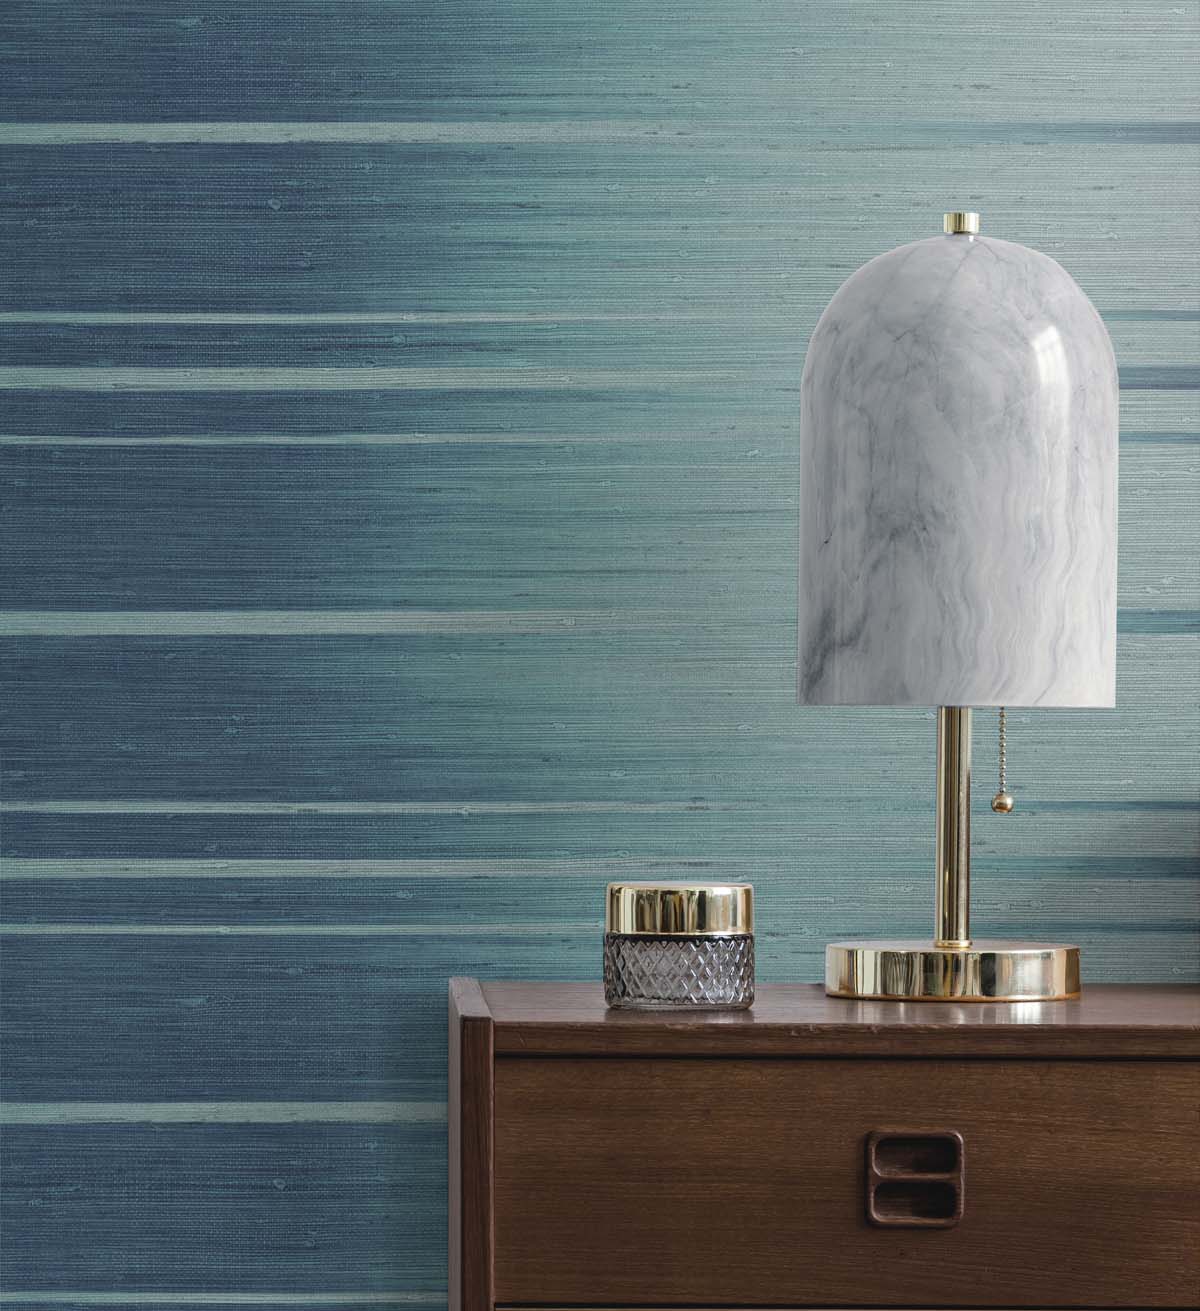 Blue vinyl wallpaper with desk lamp atop desk